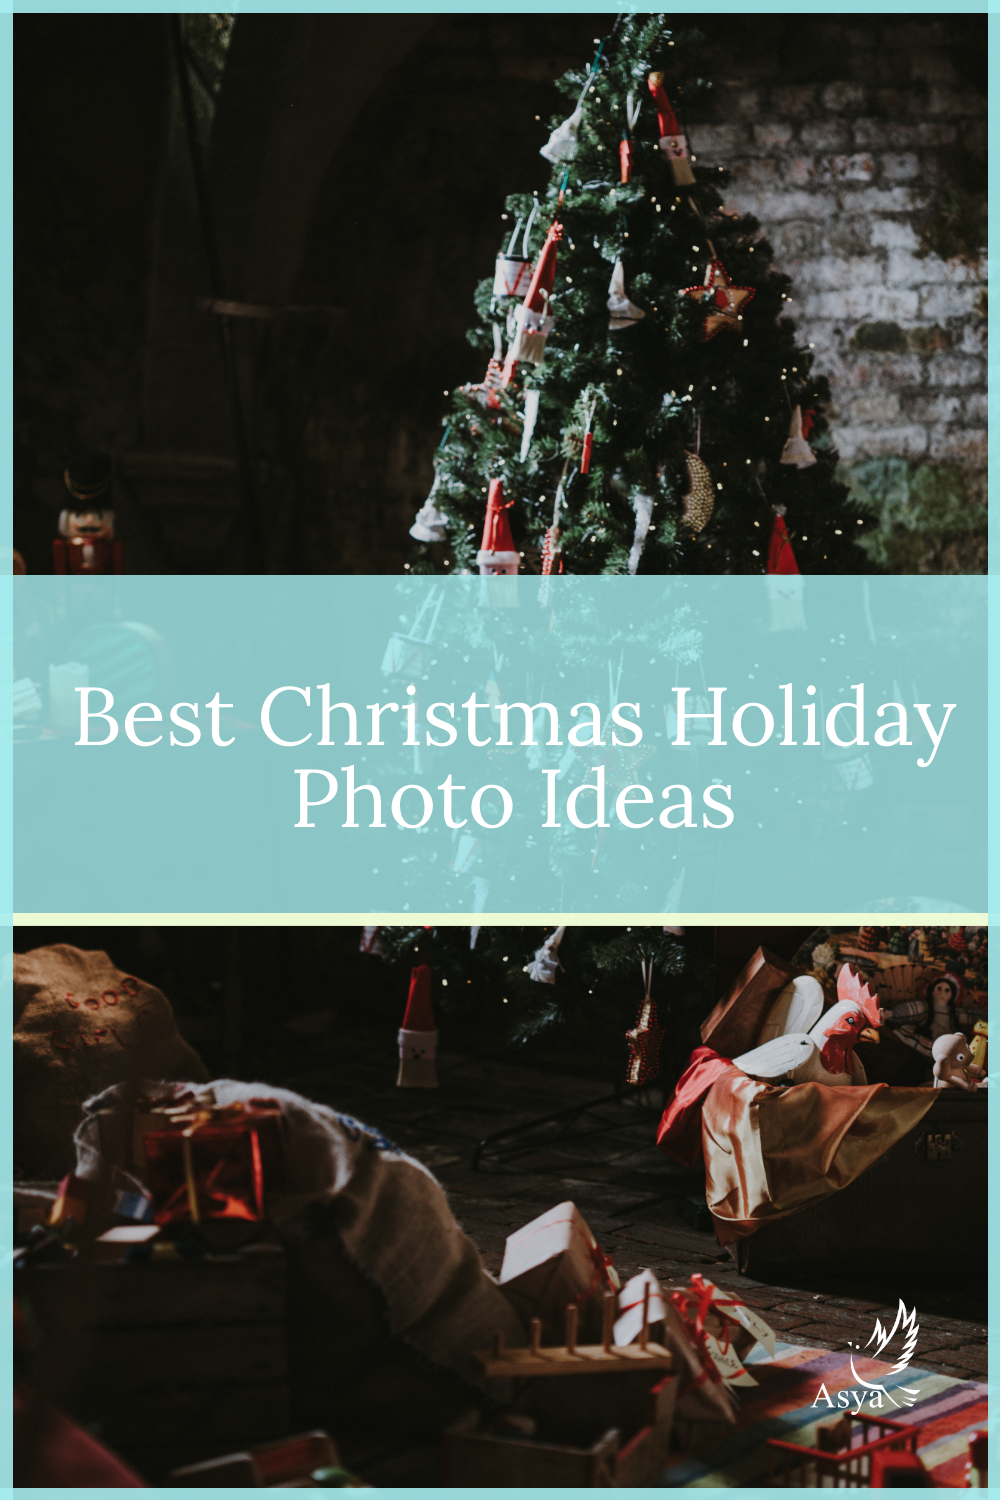 Best Christmas Holiday Photo Ideas by Asya.jpg